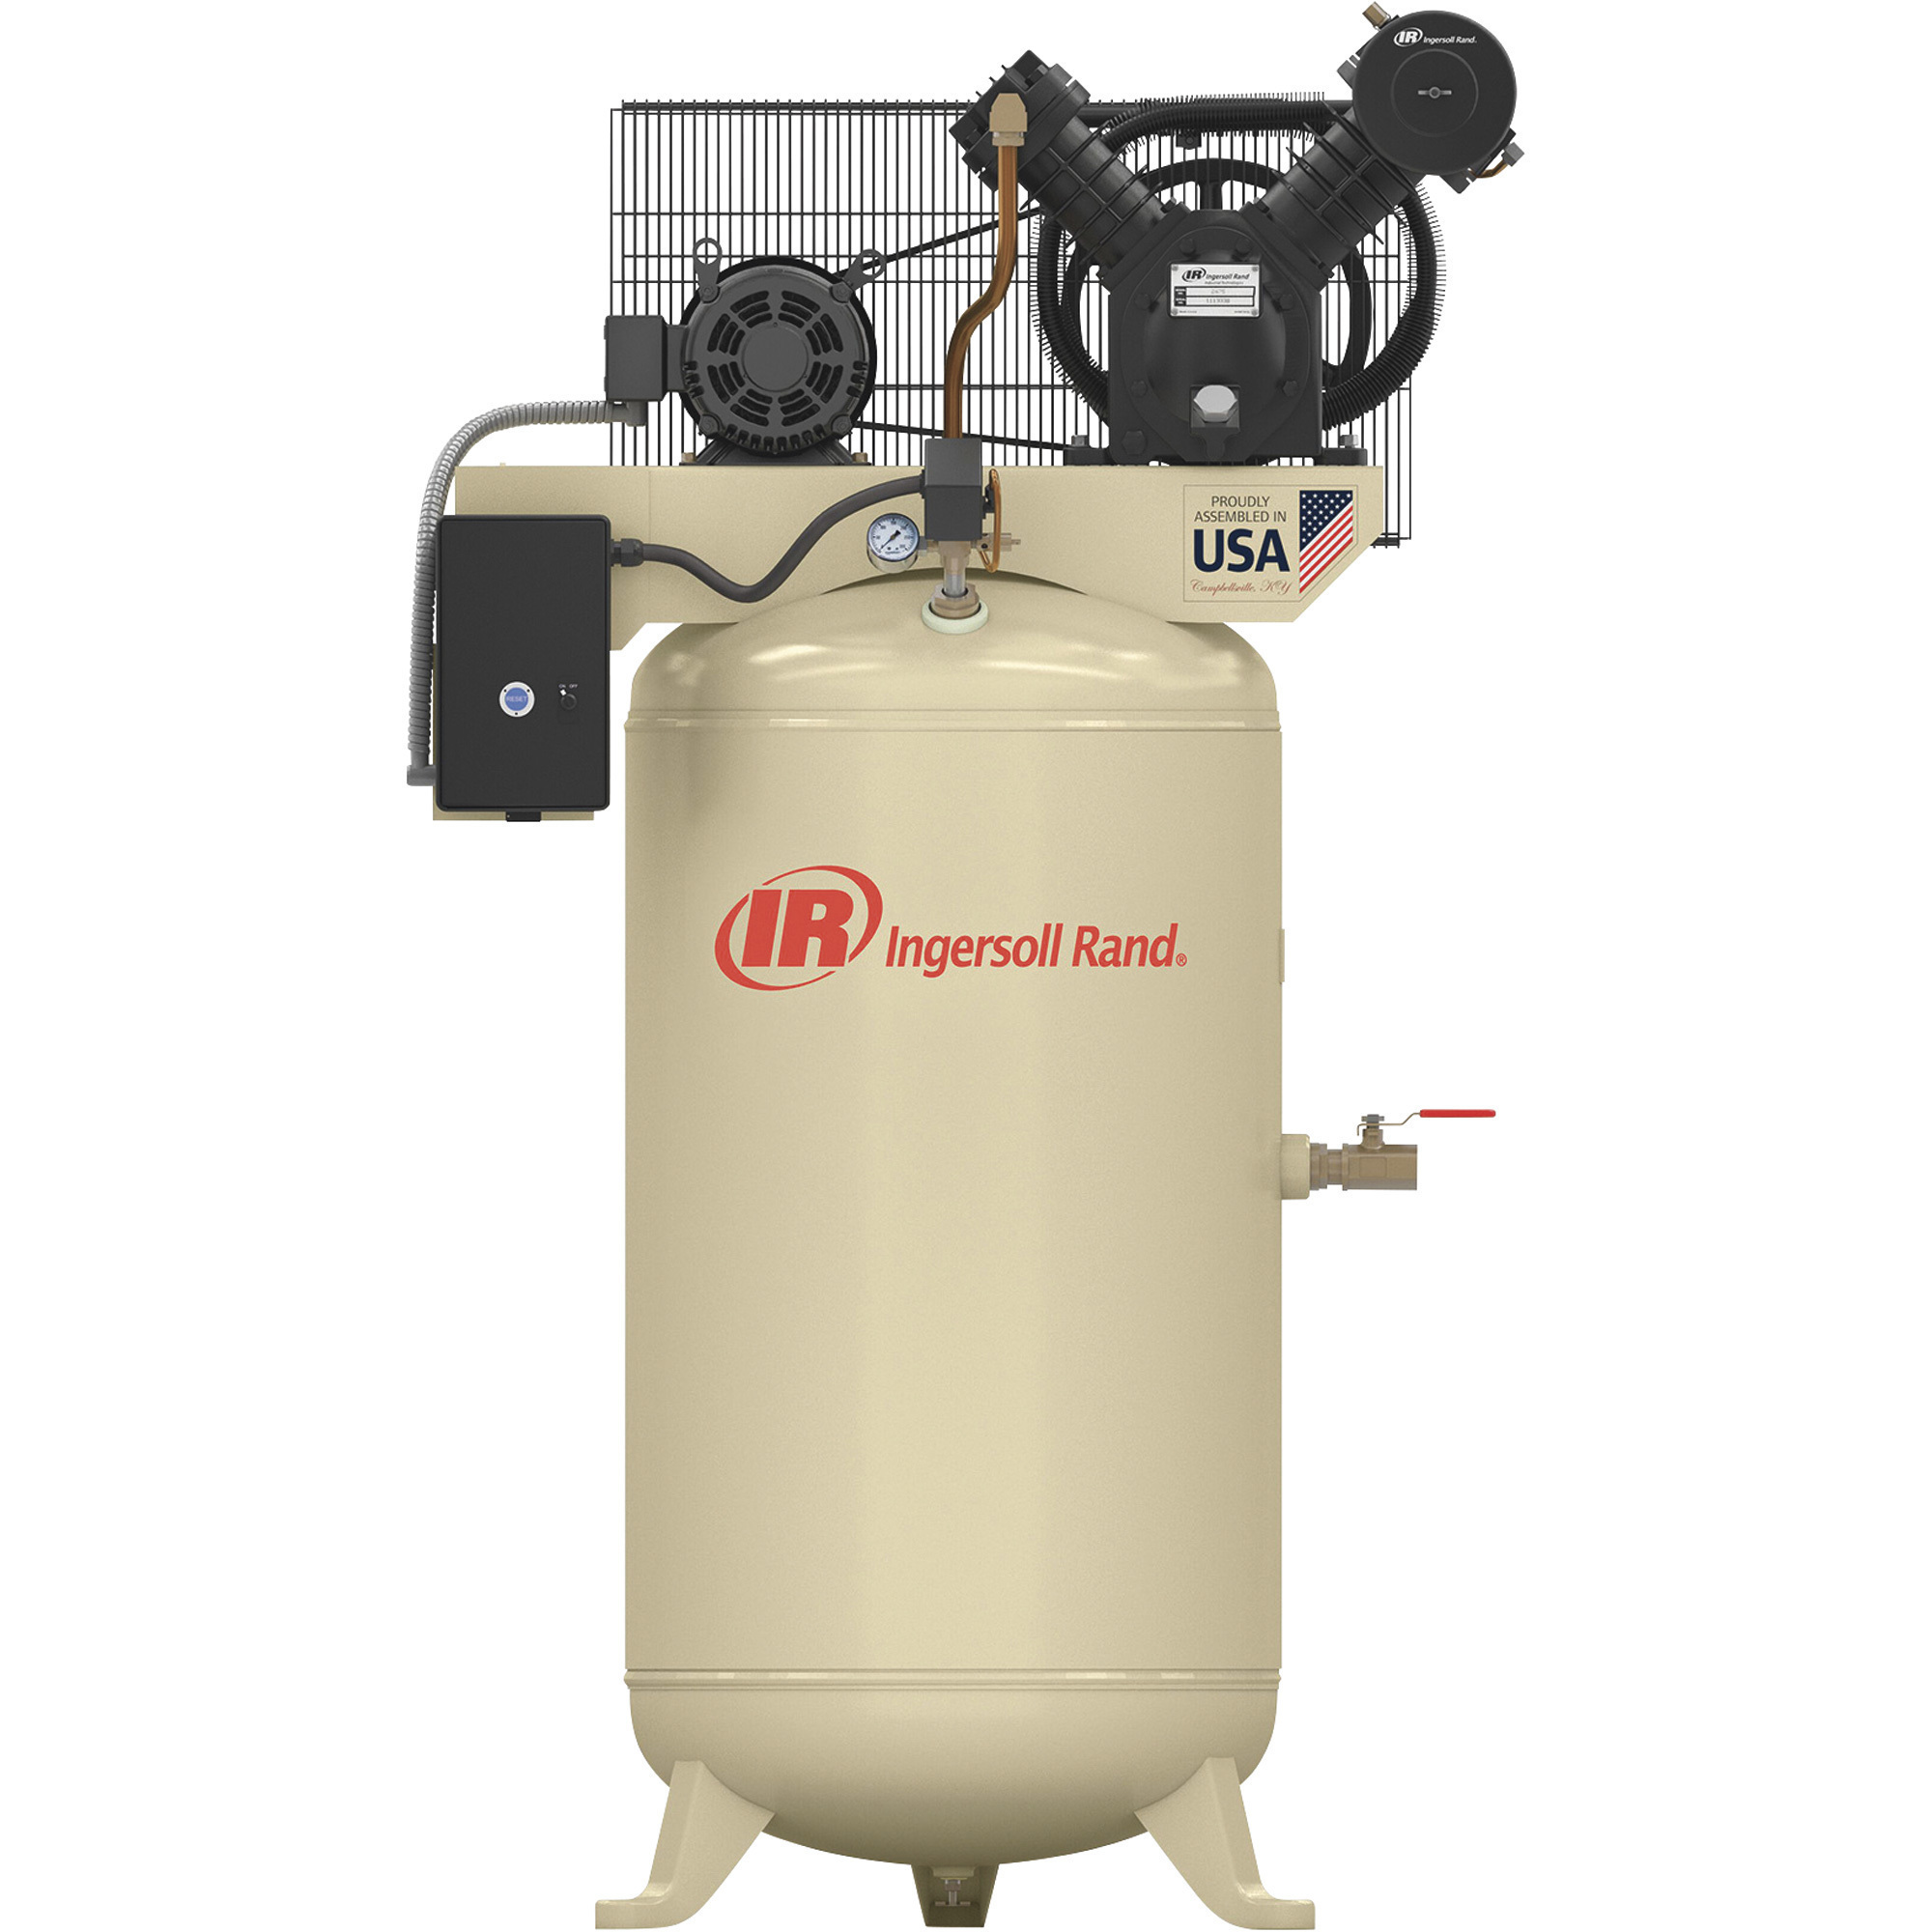 Ingersoll Rand Type-30 Reciprocating Air Compressor, 7.5 HP, 230 Volt, 3 Phase, 80 Gallon Vertical, Model 2475N7.5-V